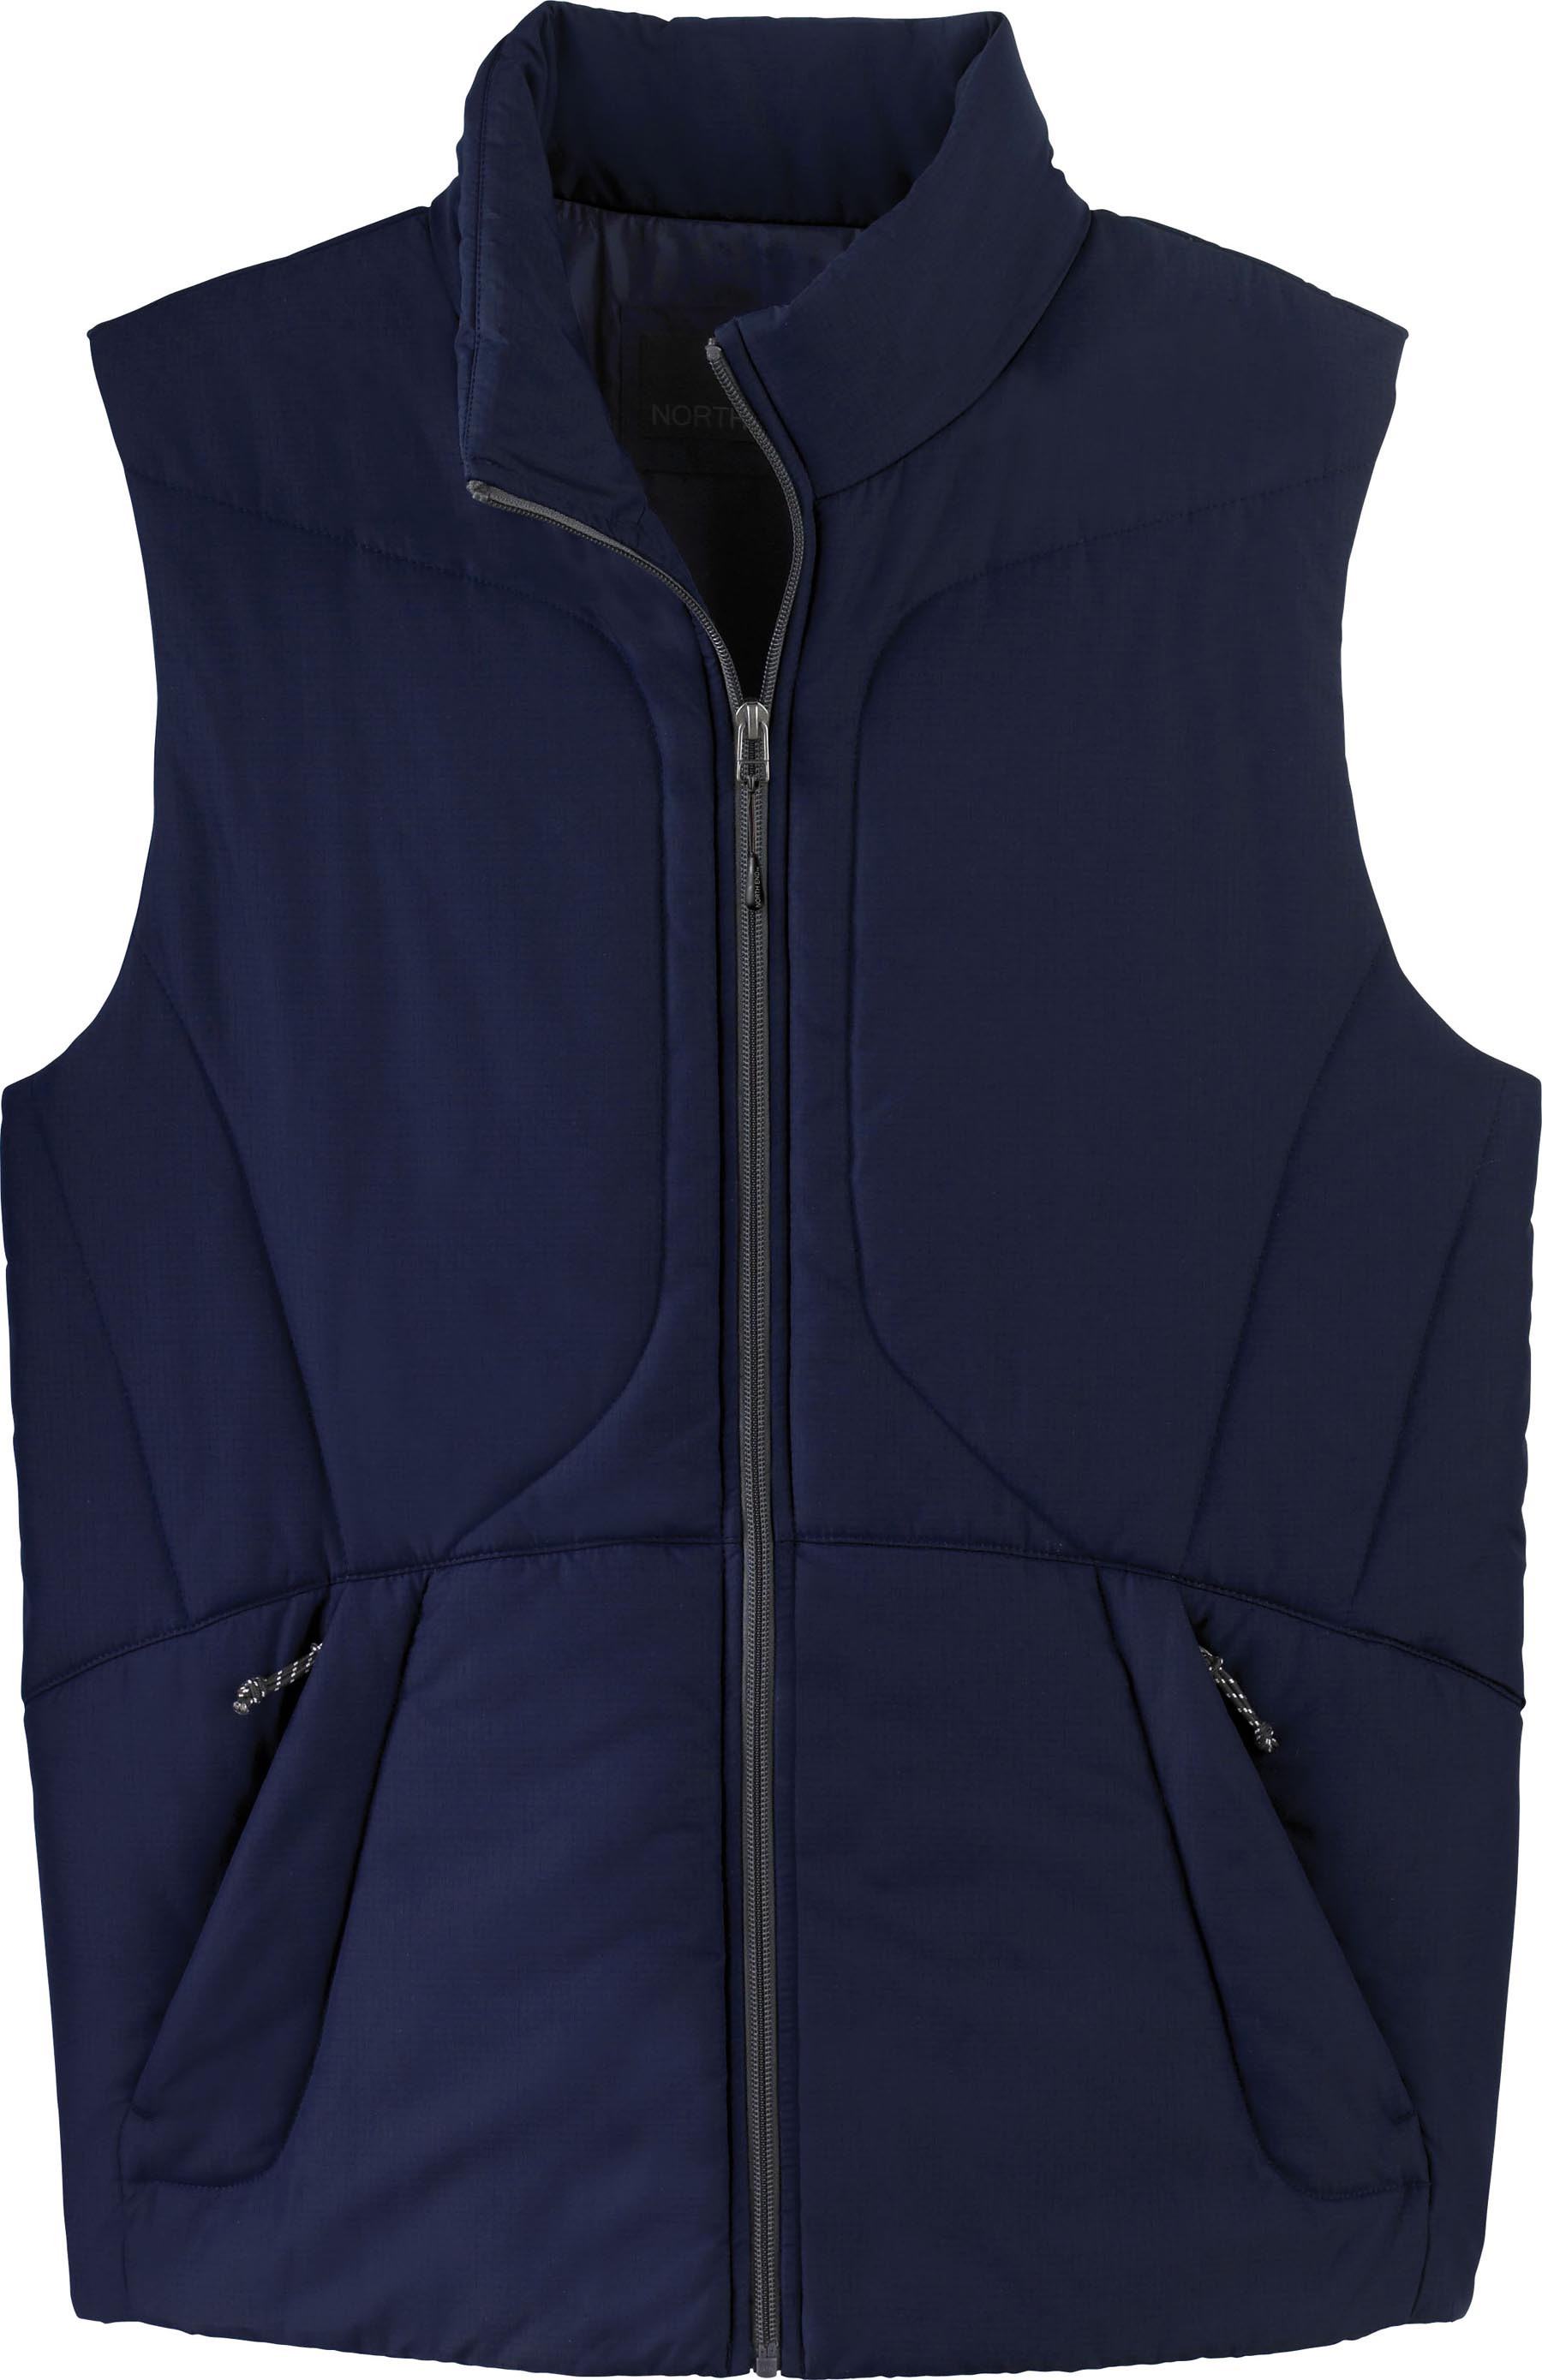 Ash City UTK 1 Warm.Logik 88160 - Men's Polyester Ripstop Insulated Vest